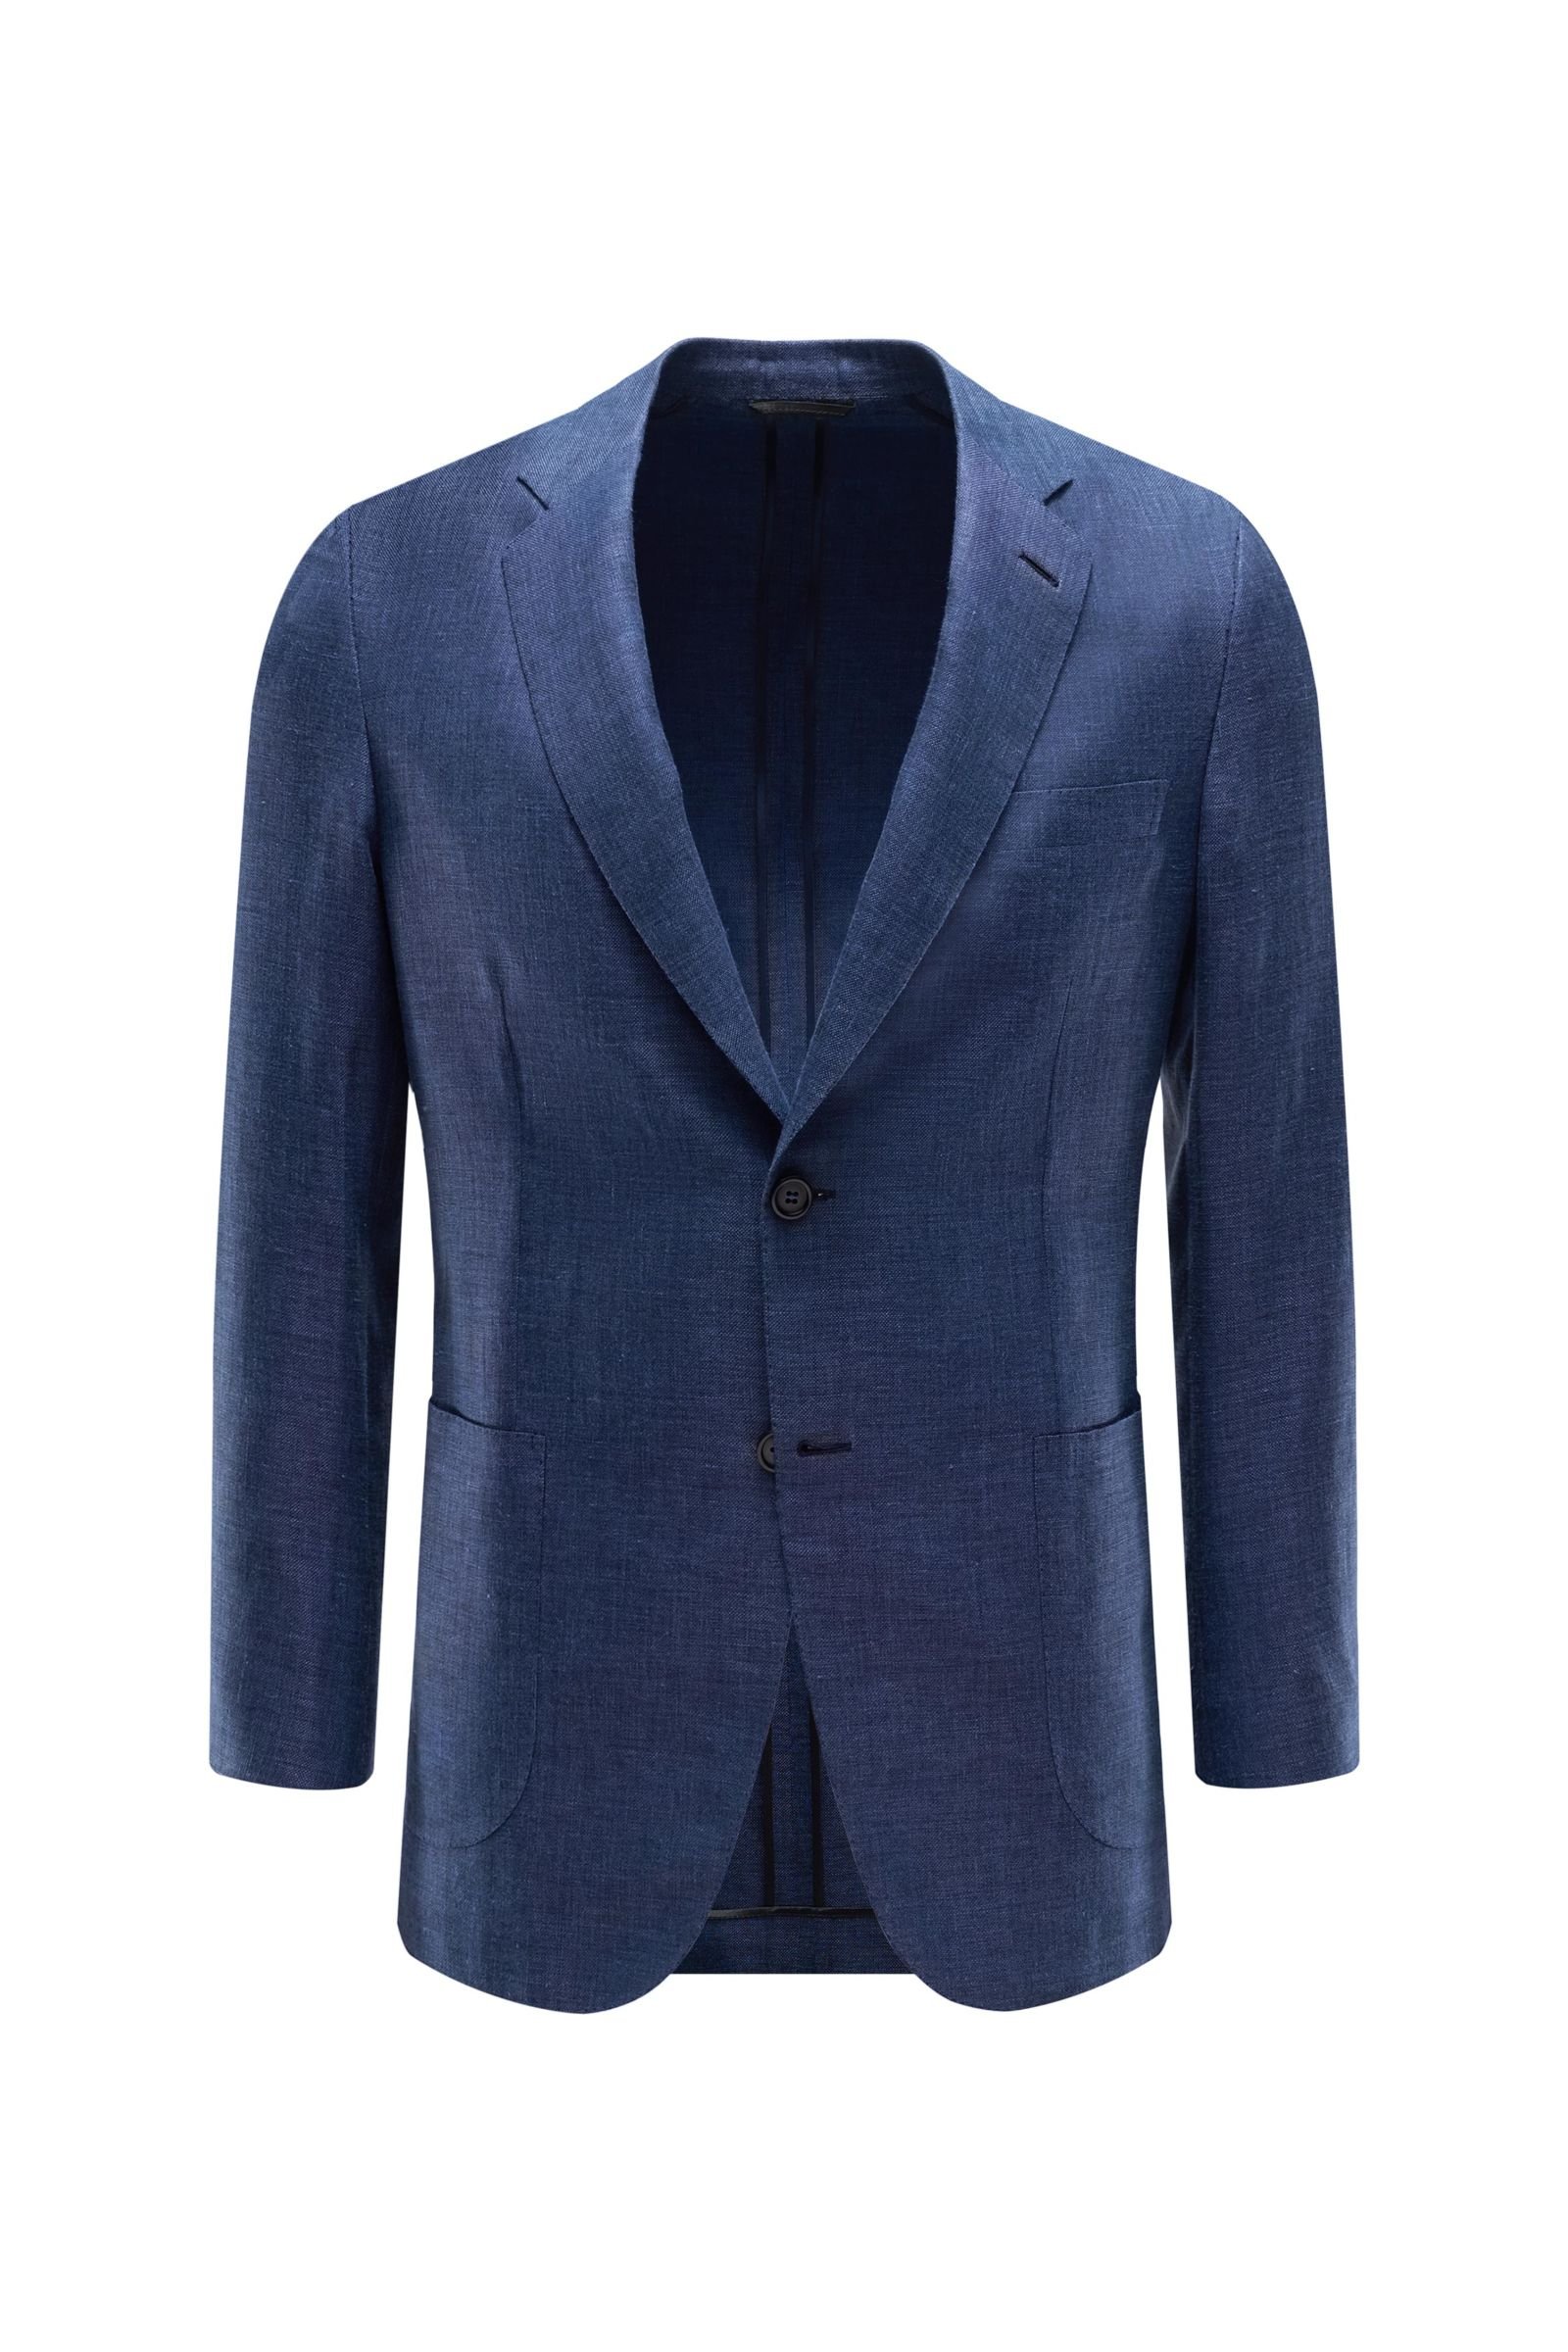 Smart-casual jacket 'Plume' dark blue